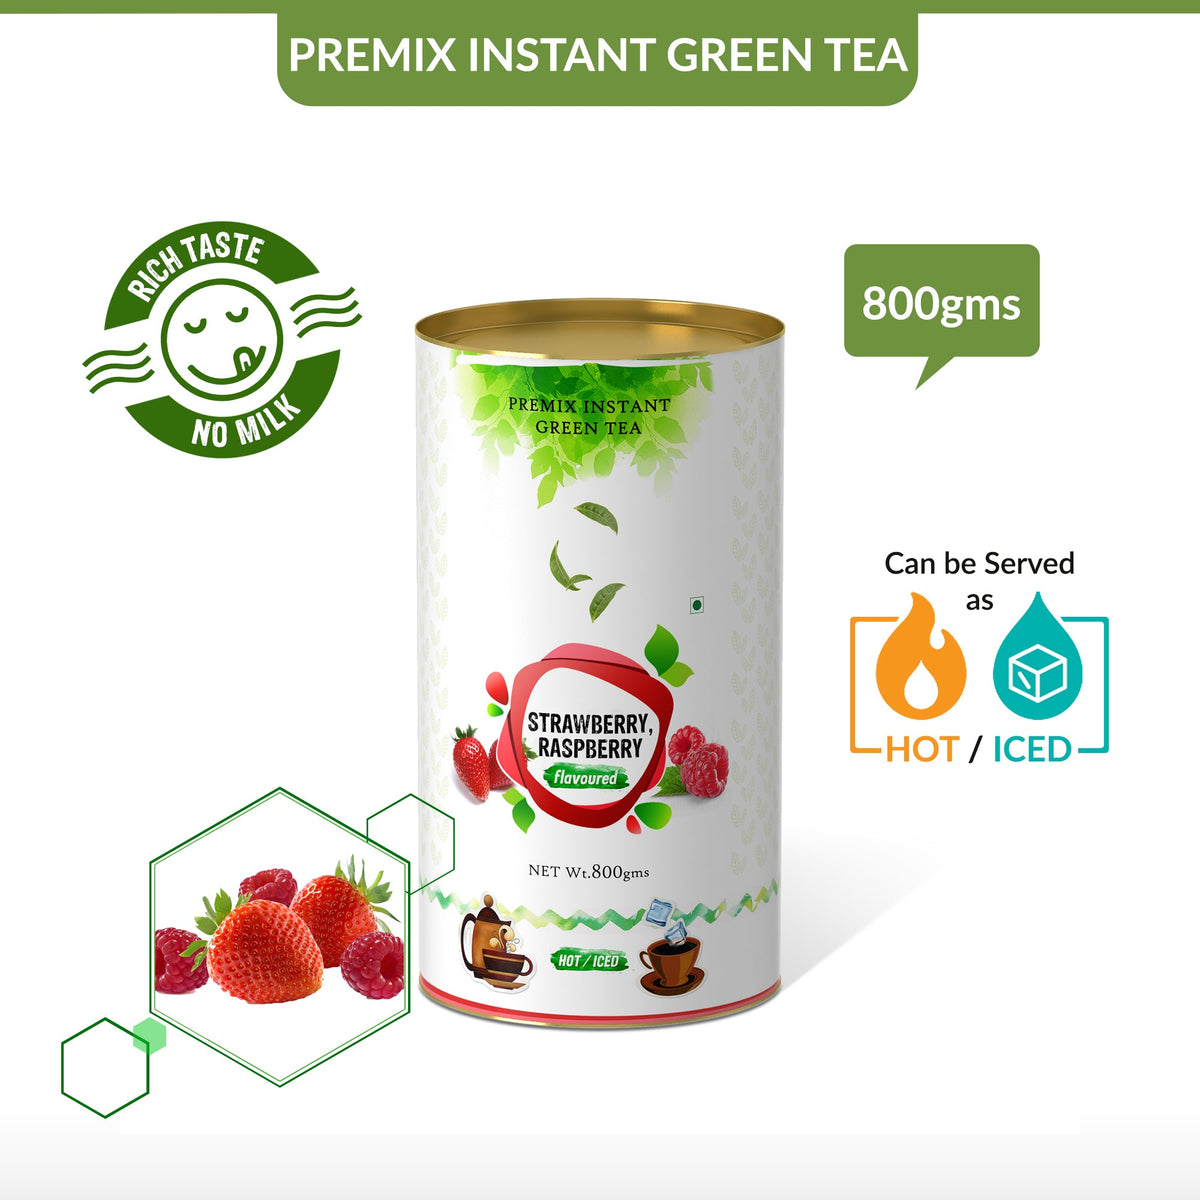 Strawberry & Rasberry Flavored Instant Green Tea